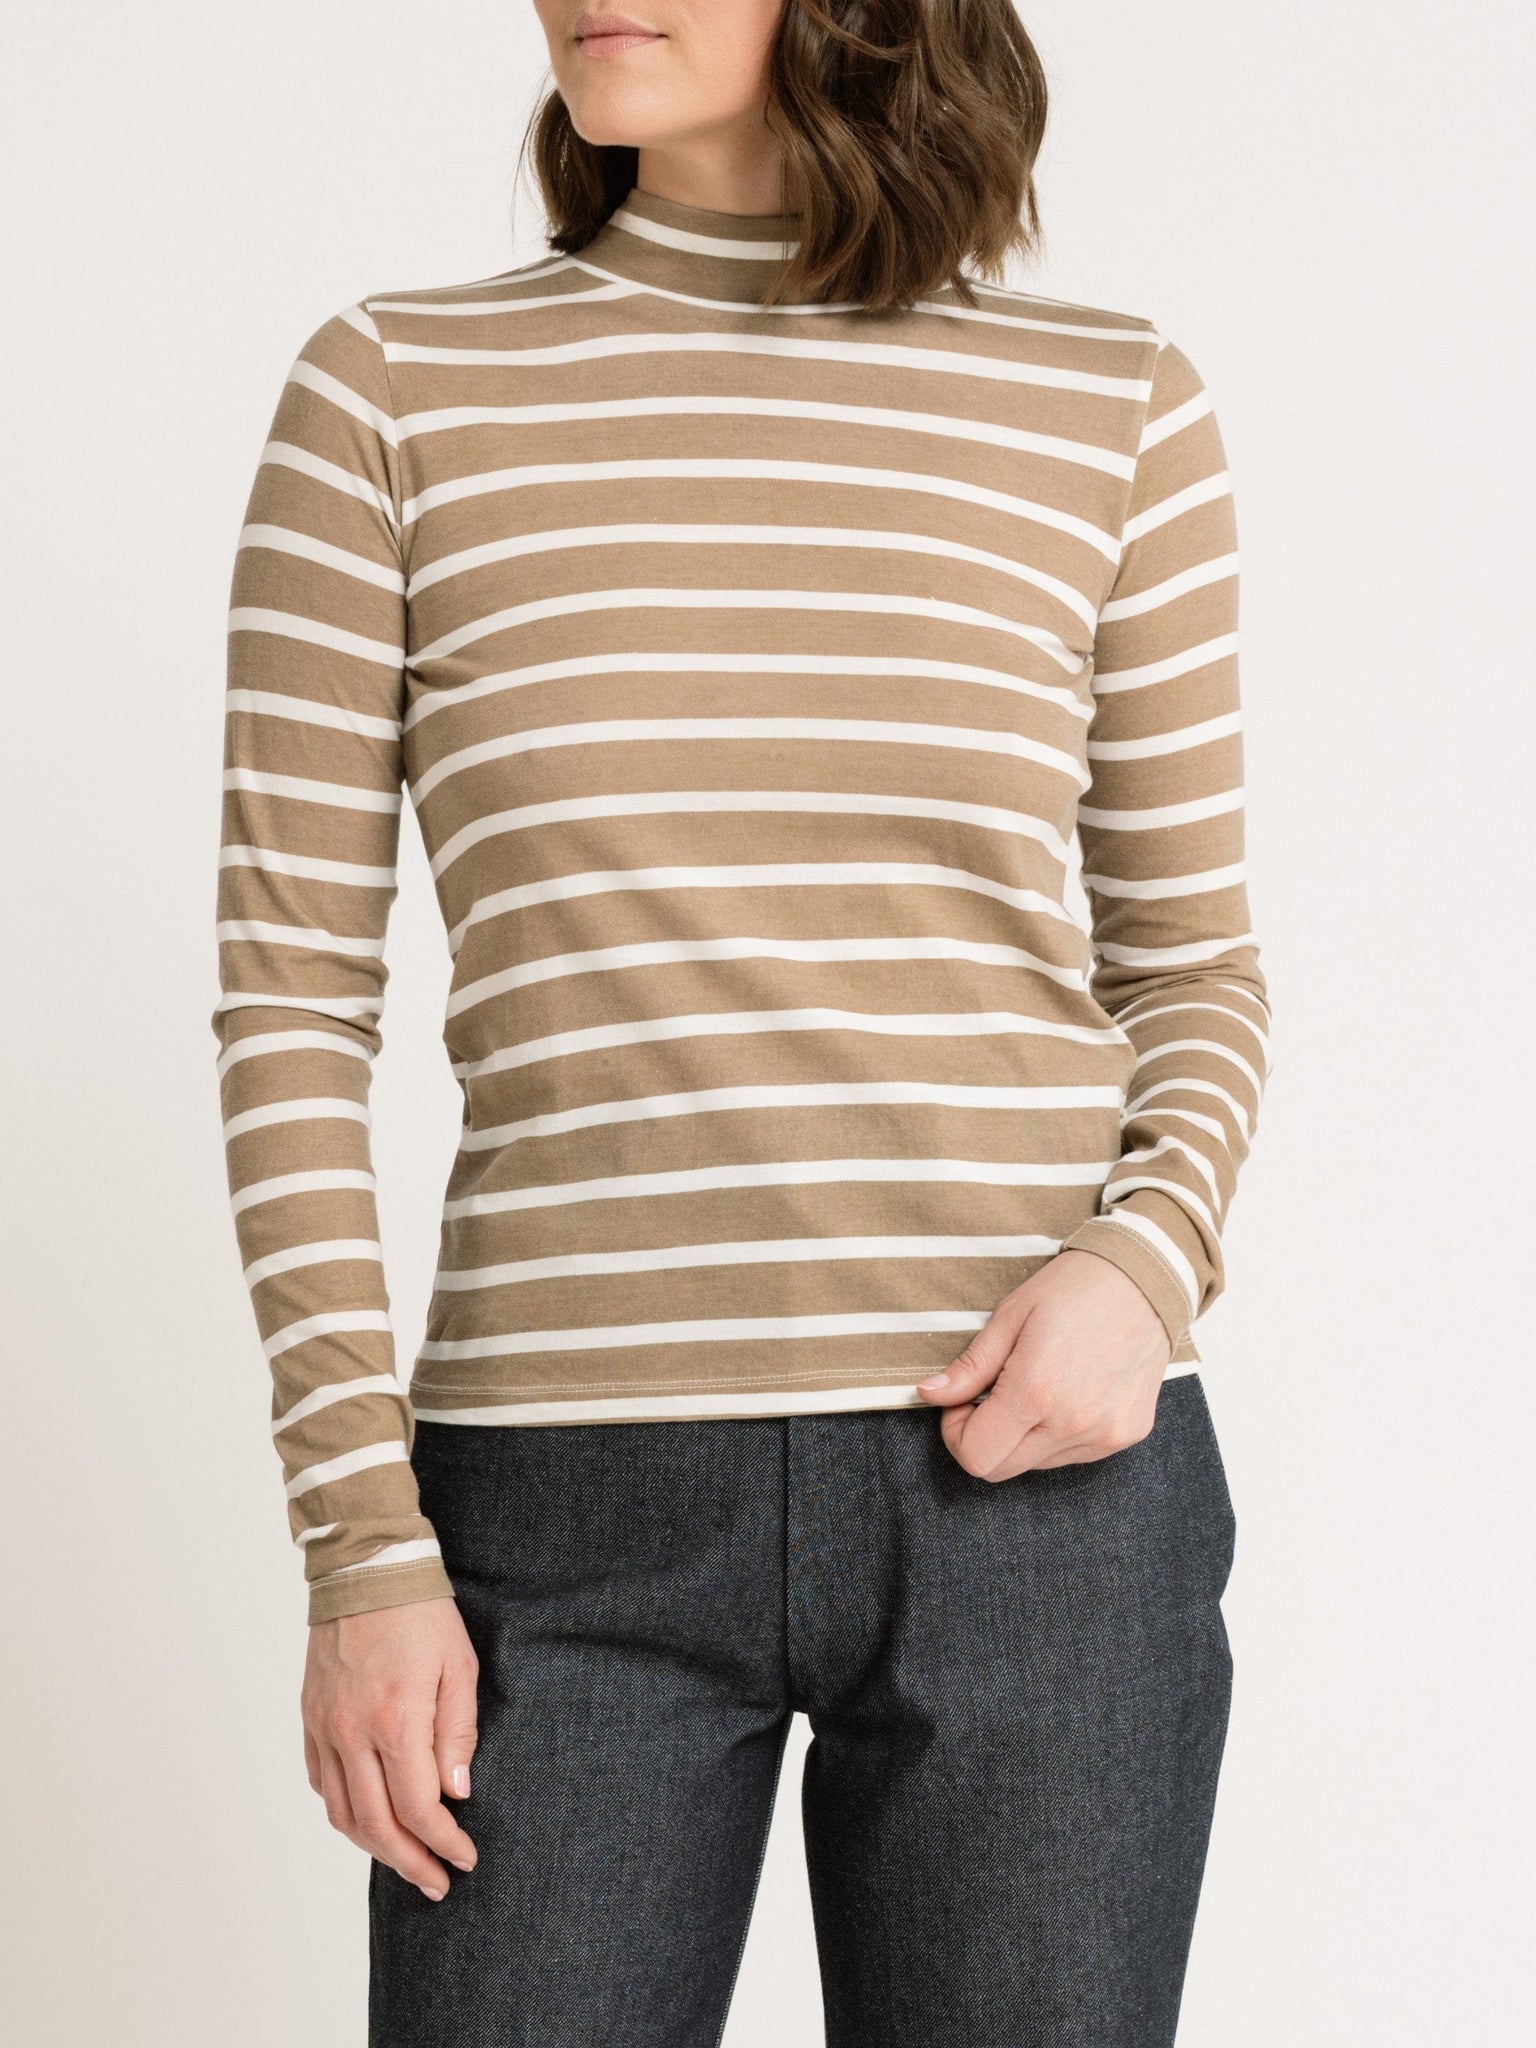 A woman wearing Sample 144 - Mock Neck Long Sleeve Tee - Tannin Stripe as a fit sample.